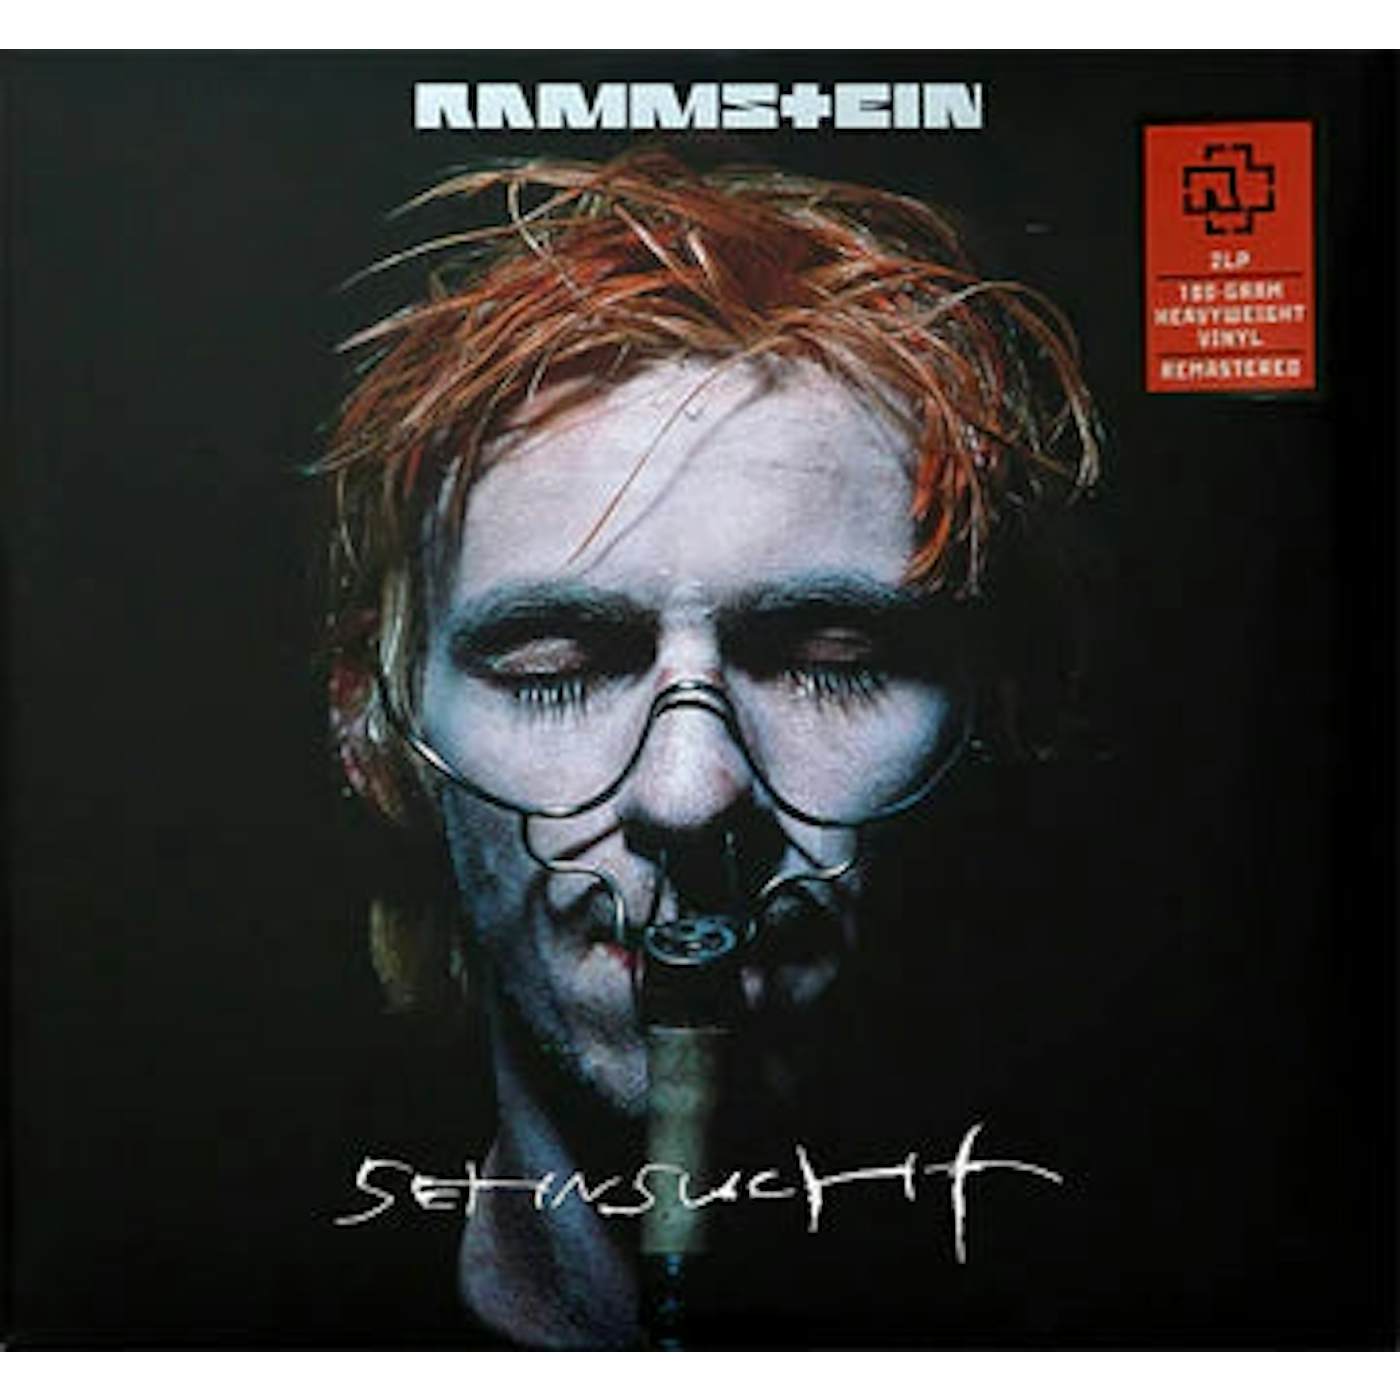 Rammstein Shirts,Rammstein Merch,Rammstein Hoodies,Rammstein Vinyl Records, Rammstein Posters,Rammstein Hats,Rammstein CDs,Rammstein Music,Rammstein  Merch Store